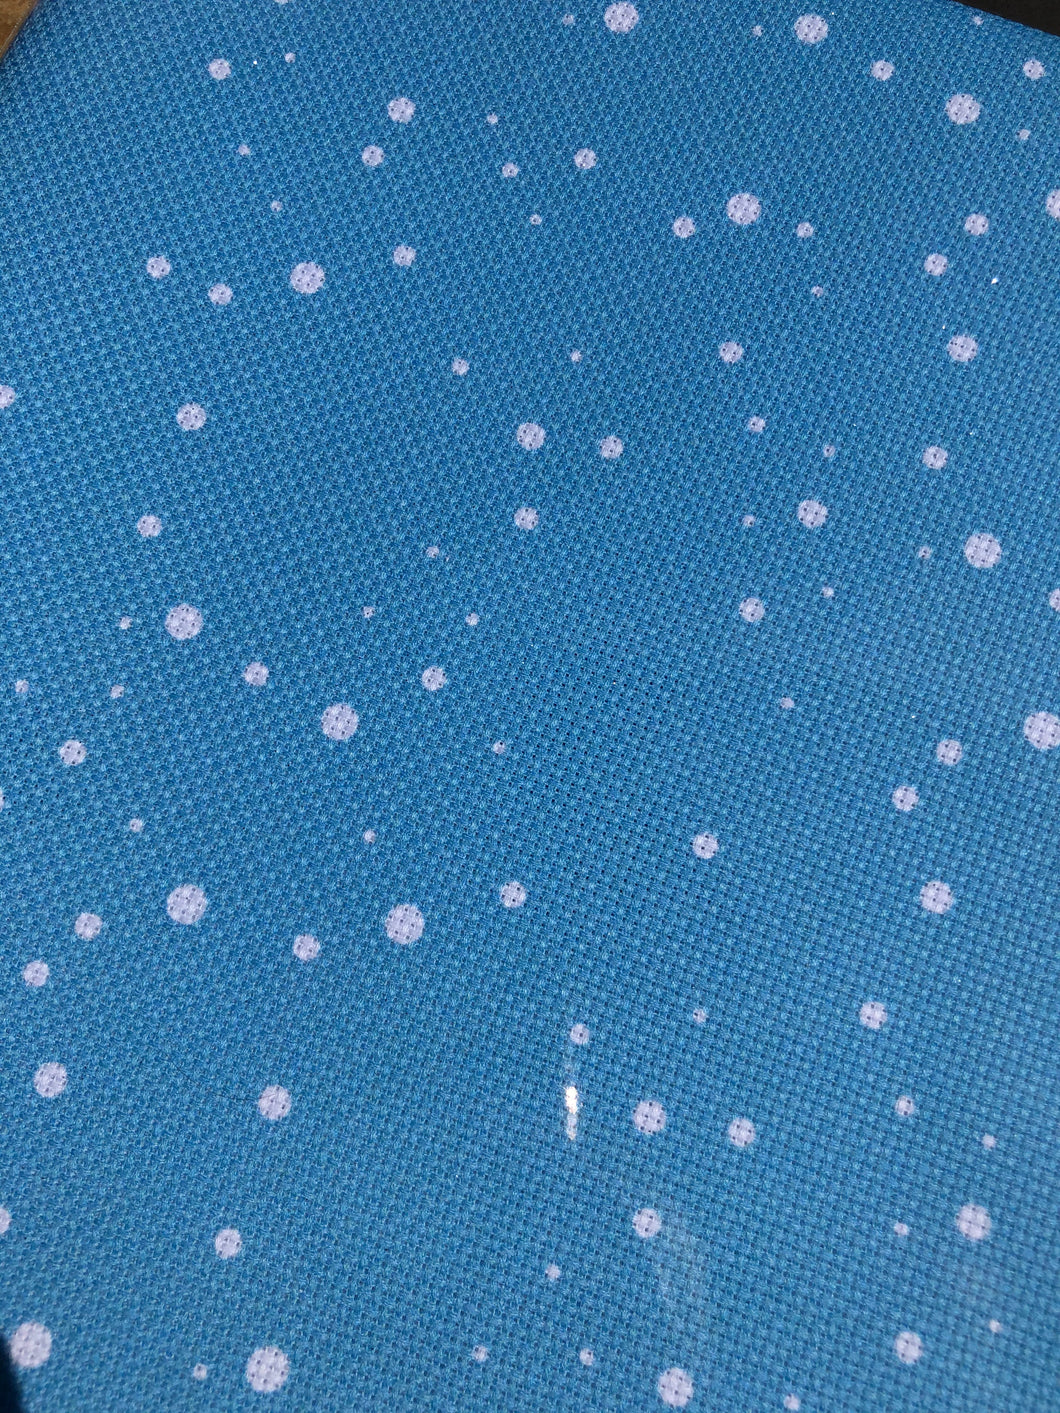 Cross Stitch Cloth - Fabric Flair 16 Count Aida - Snow on Blue with Glitter 18 x 20